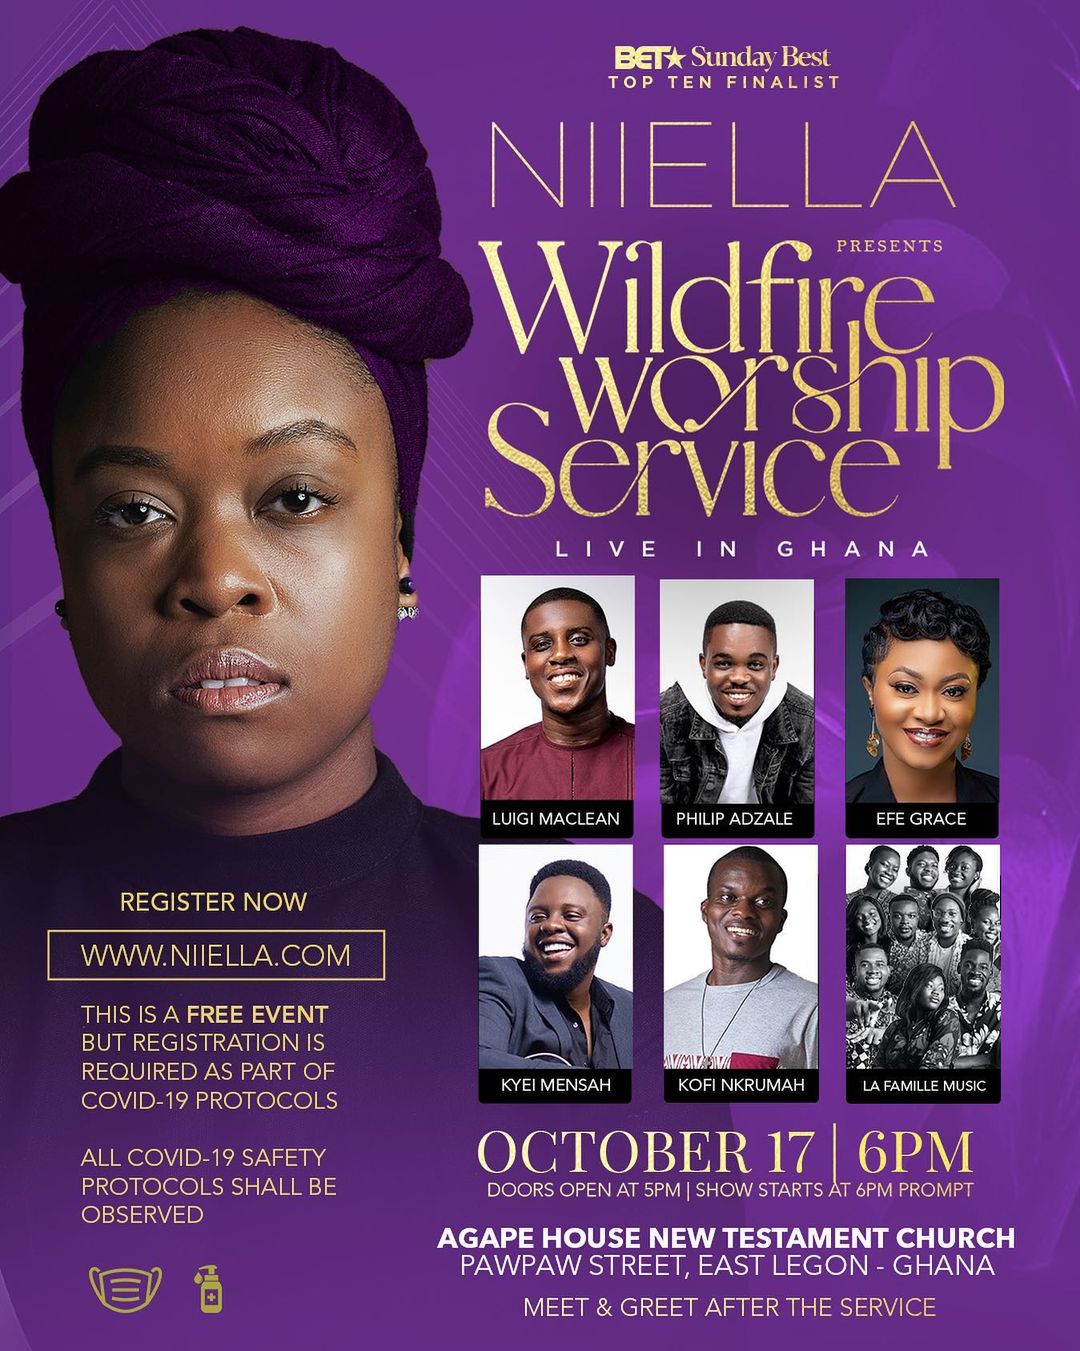 Niiella Wildfire worship service